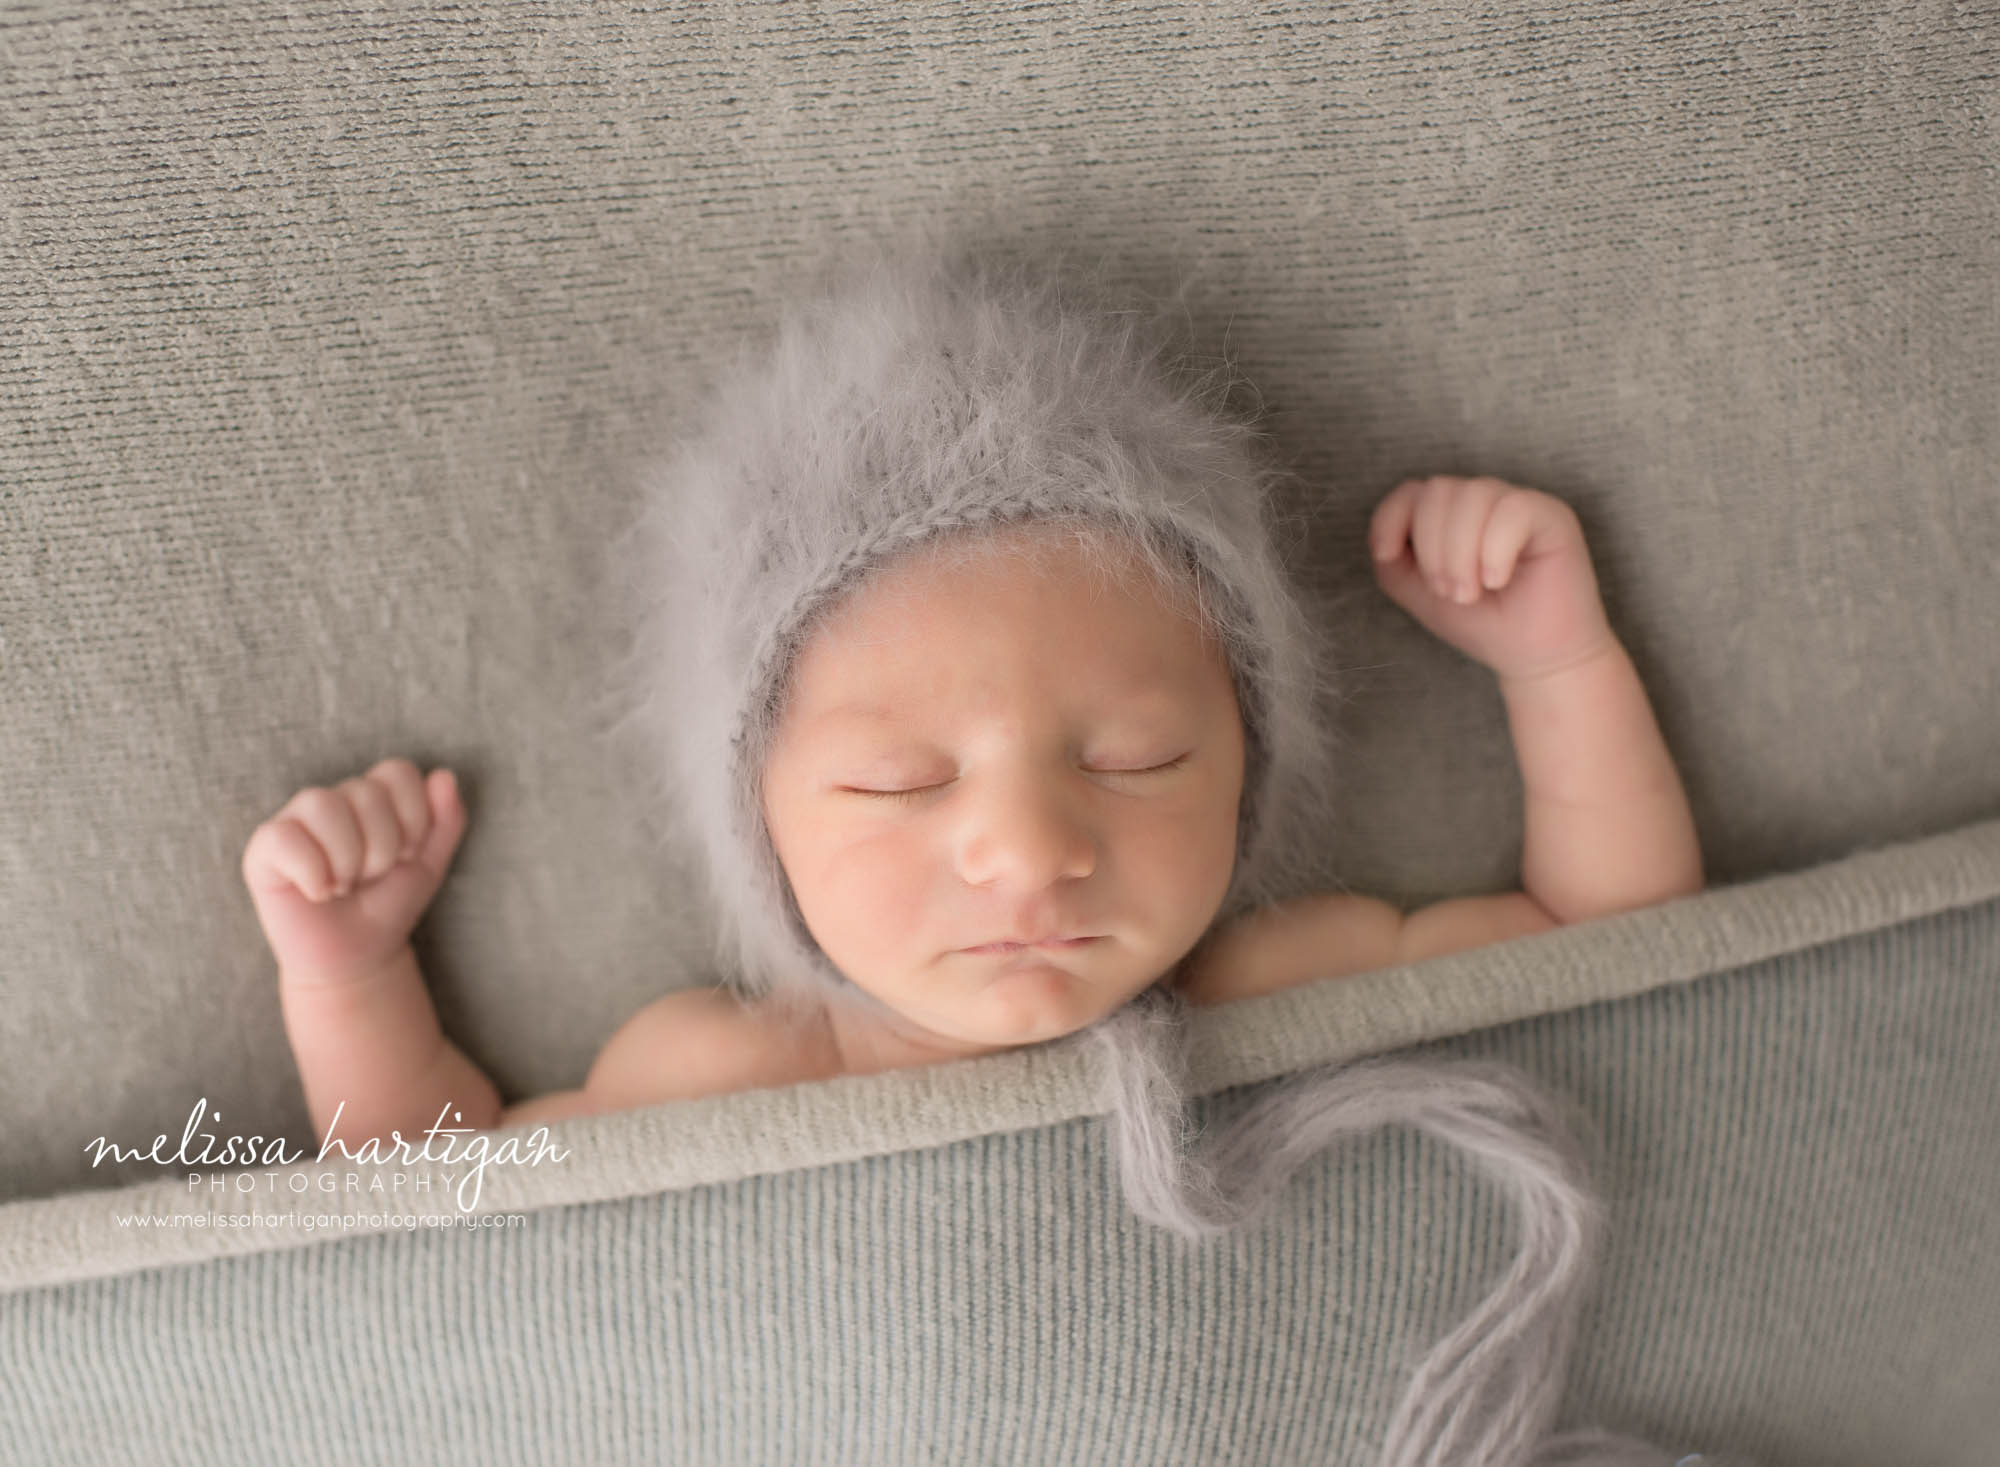 Newborn Photographer Connecticut newborn pose baby sleeping tucked under gray blanket